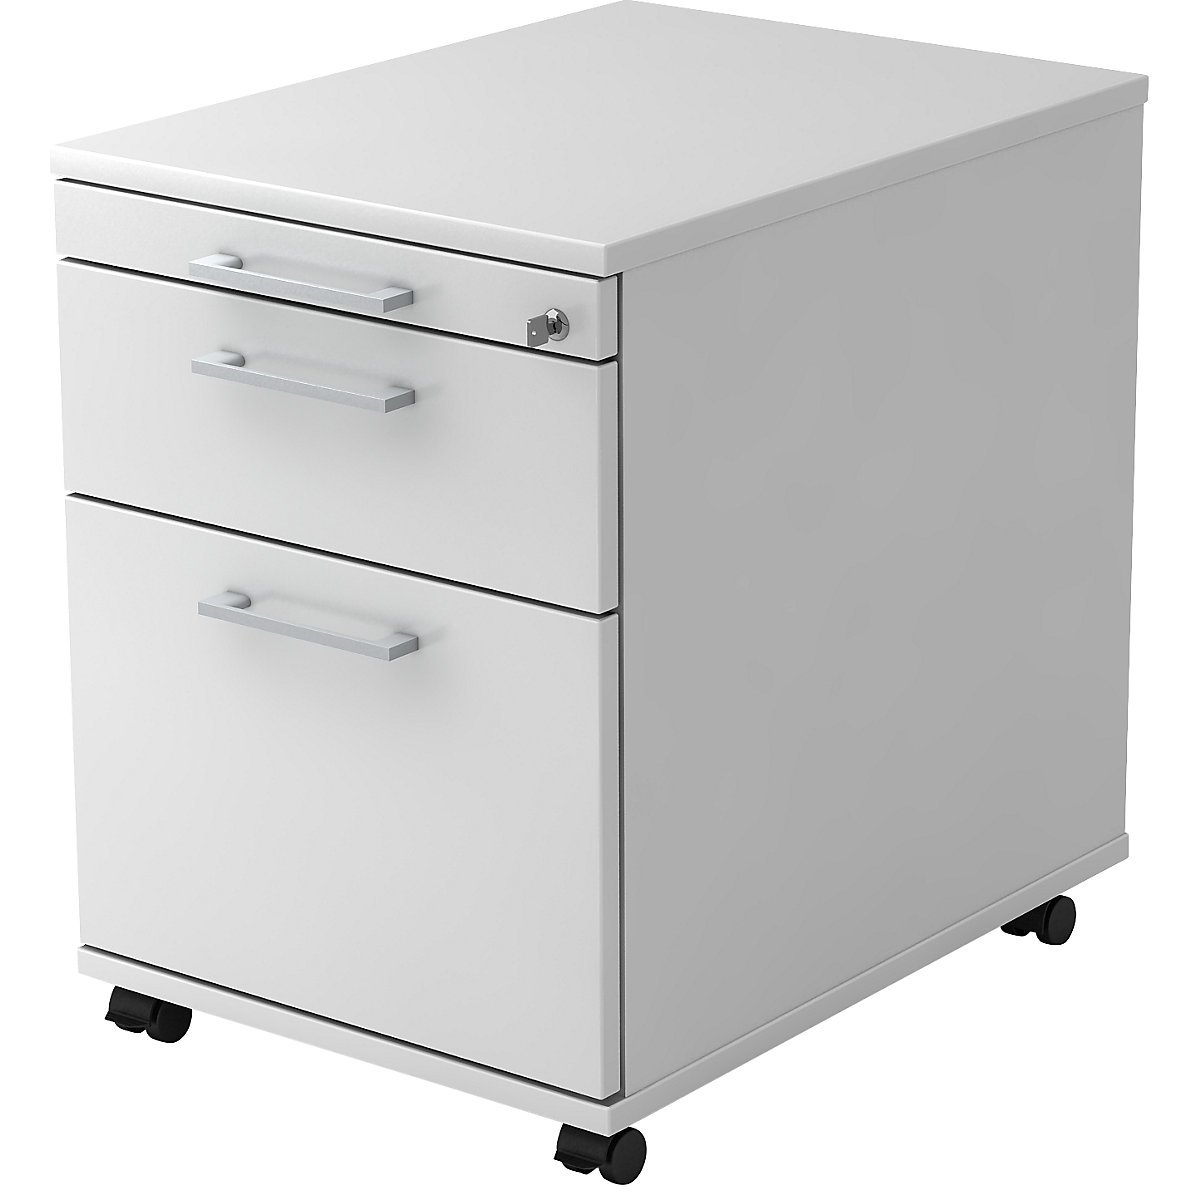 Mobile pedestal – eurokraft pro, 1 utensil drawer, 1 drawer, 1 file suspension drawer, depth 580 mm, white-12